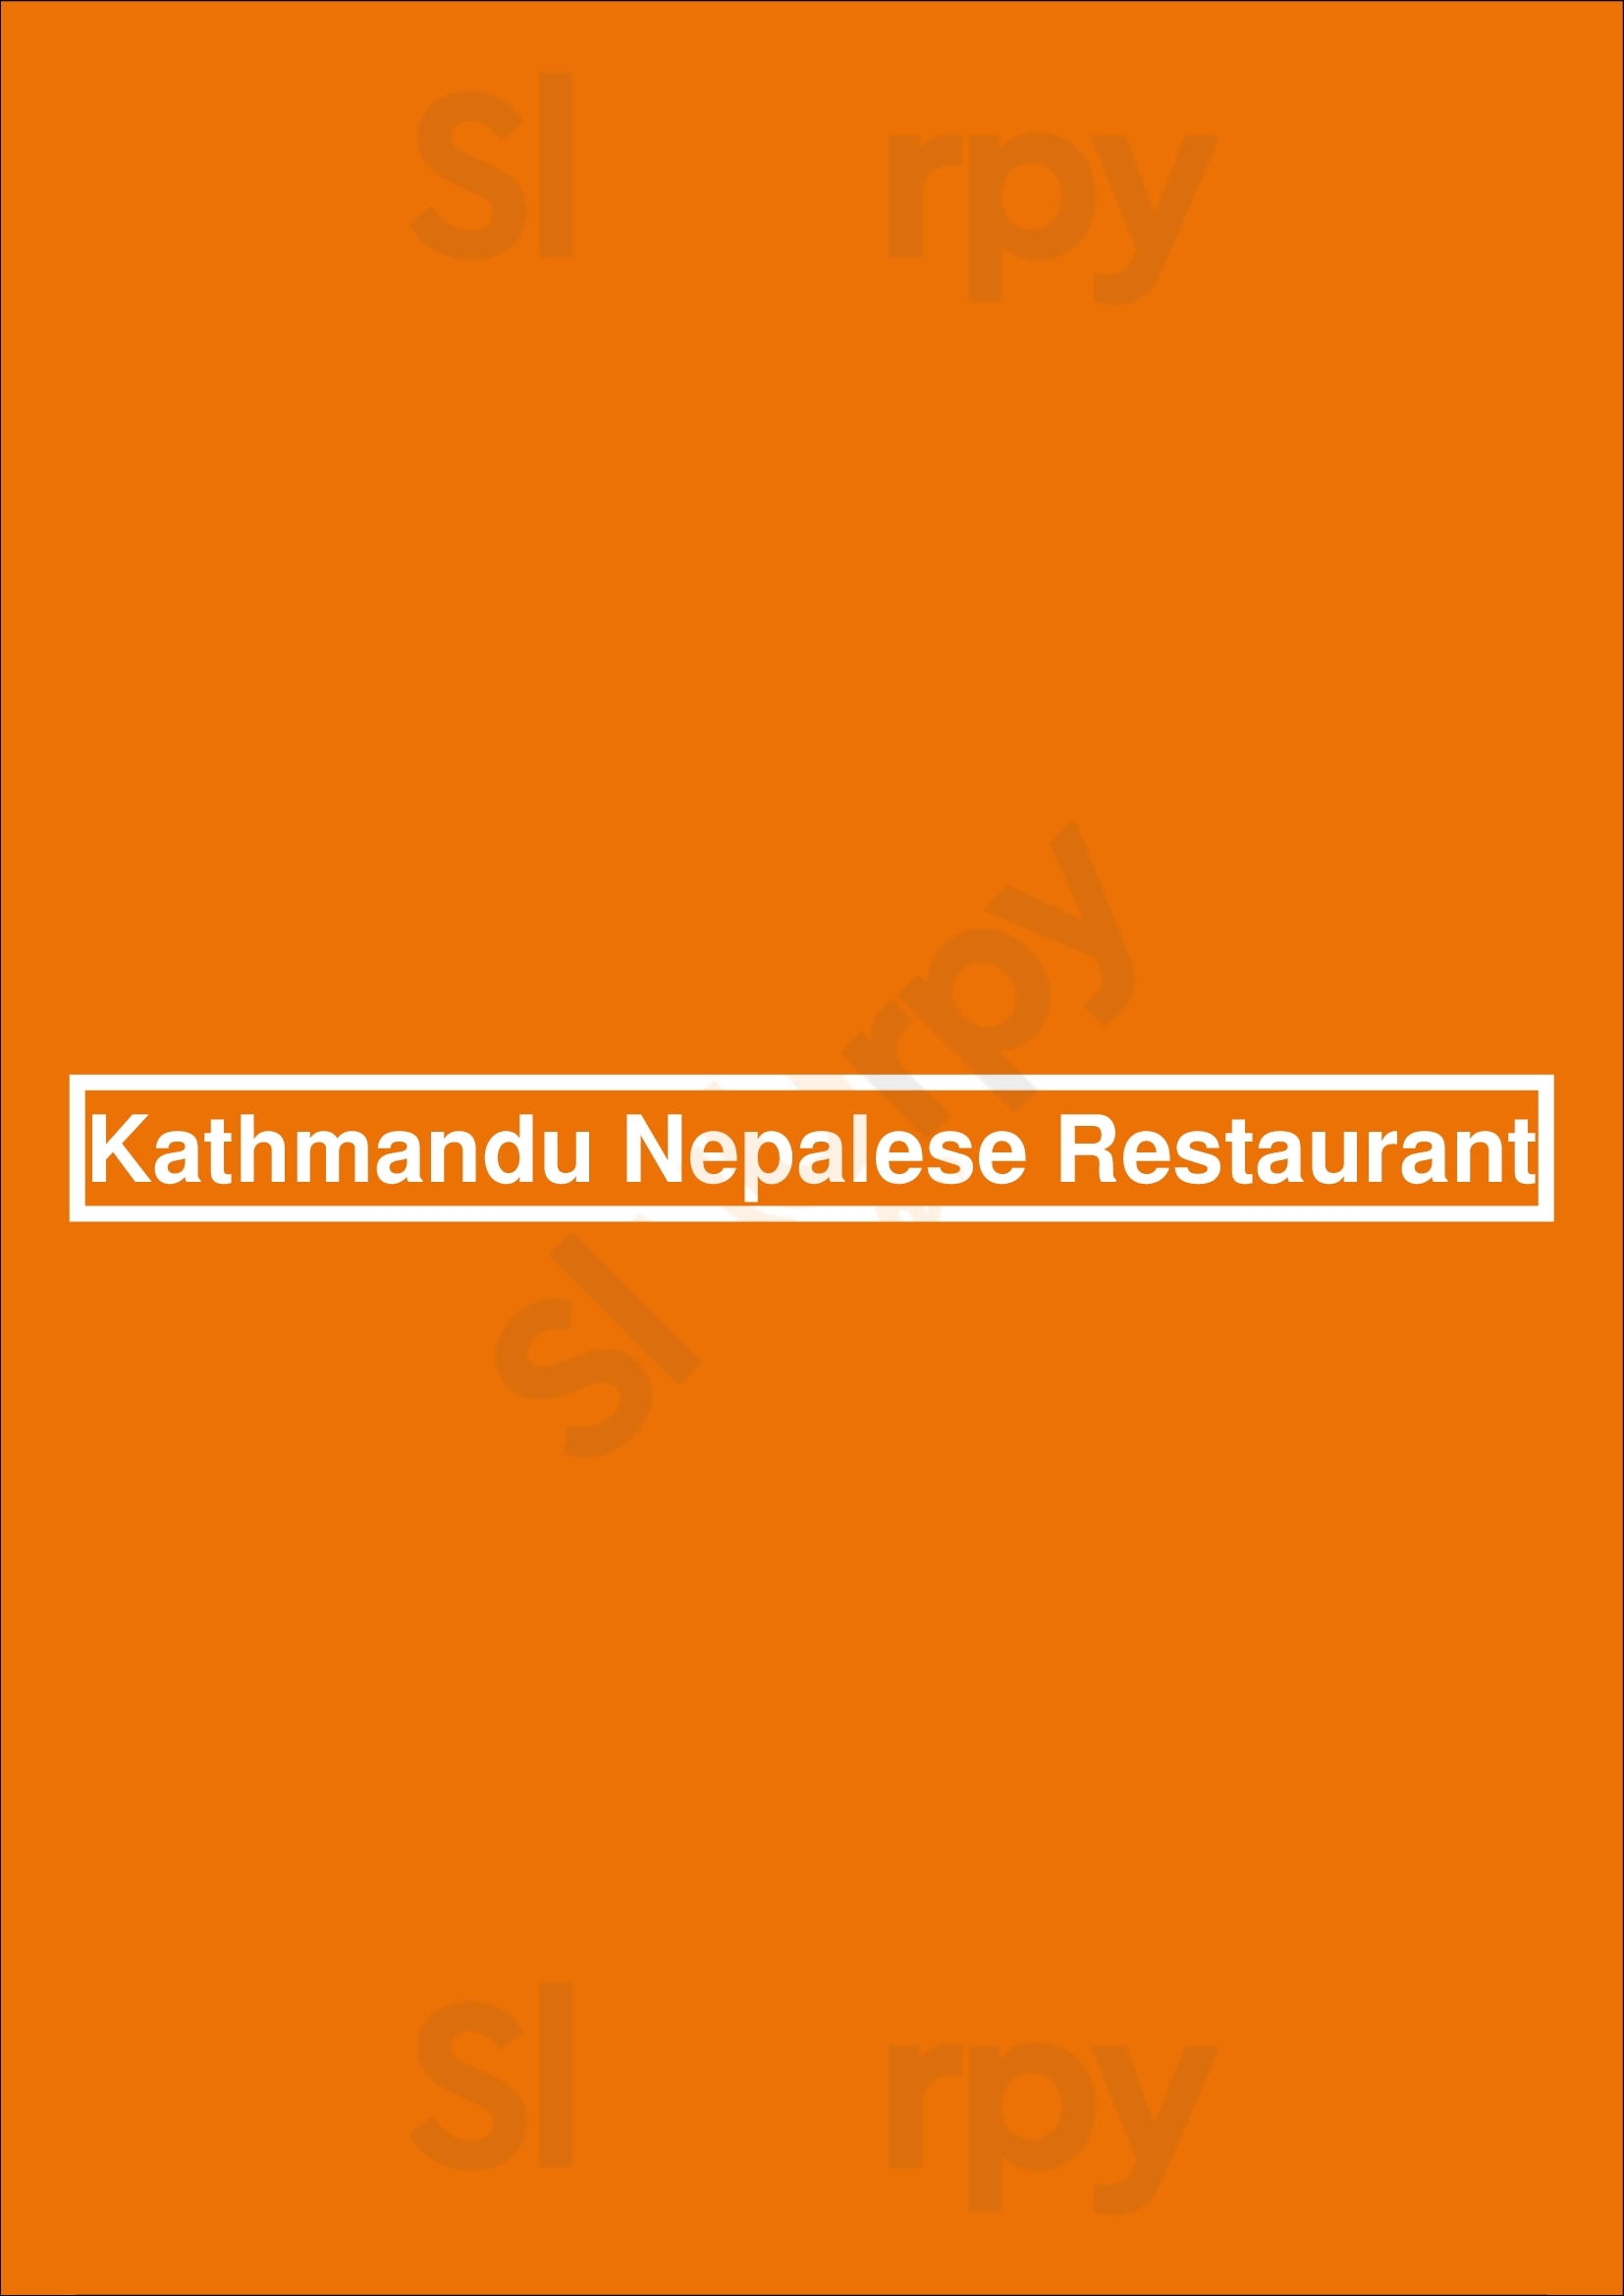 Kathmandu Nepalese Restaurant Dalkey Menu - 1